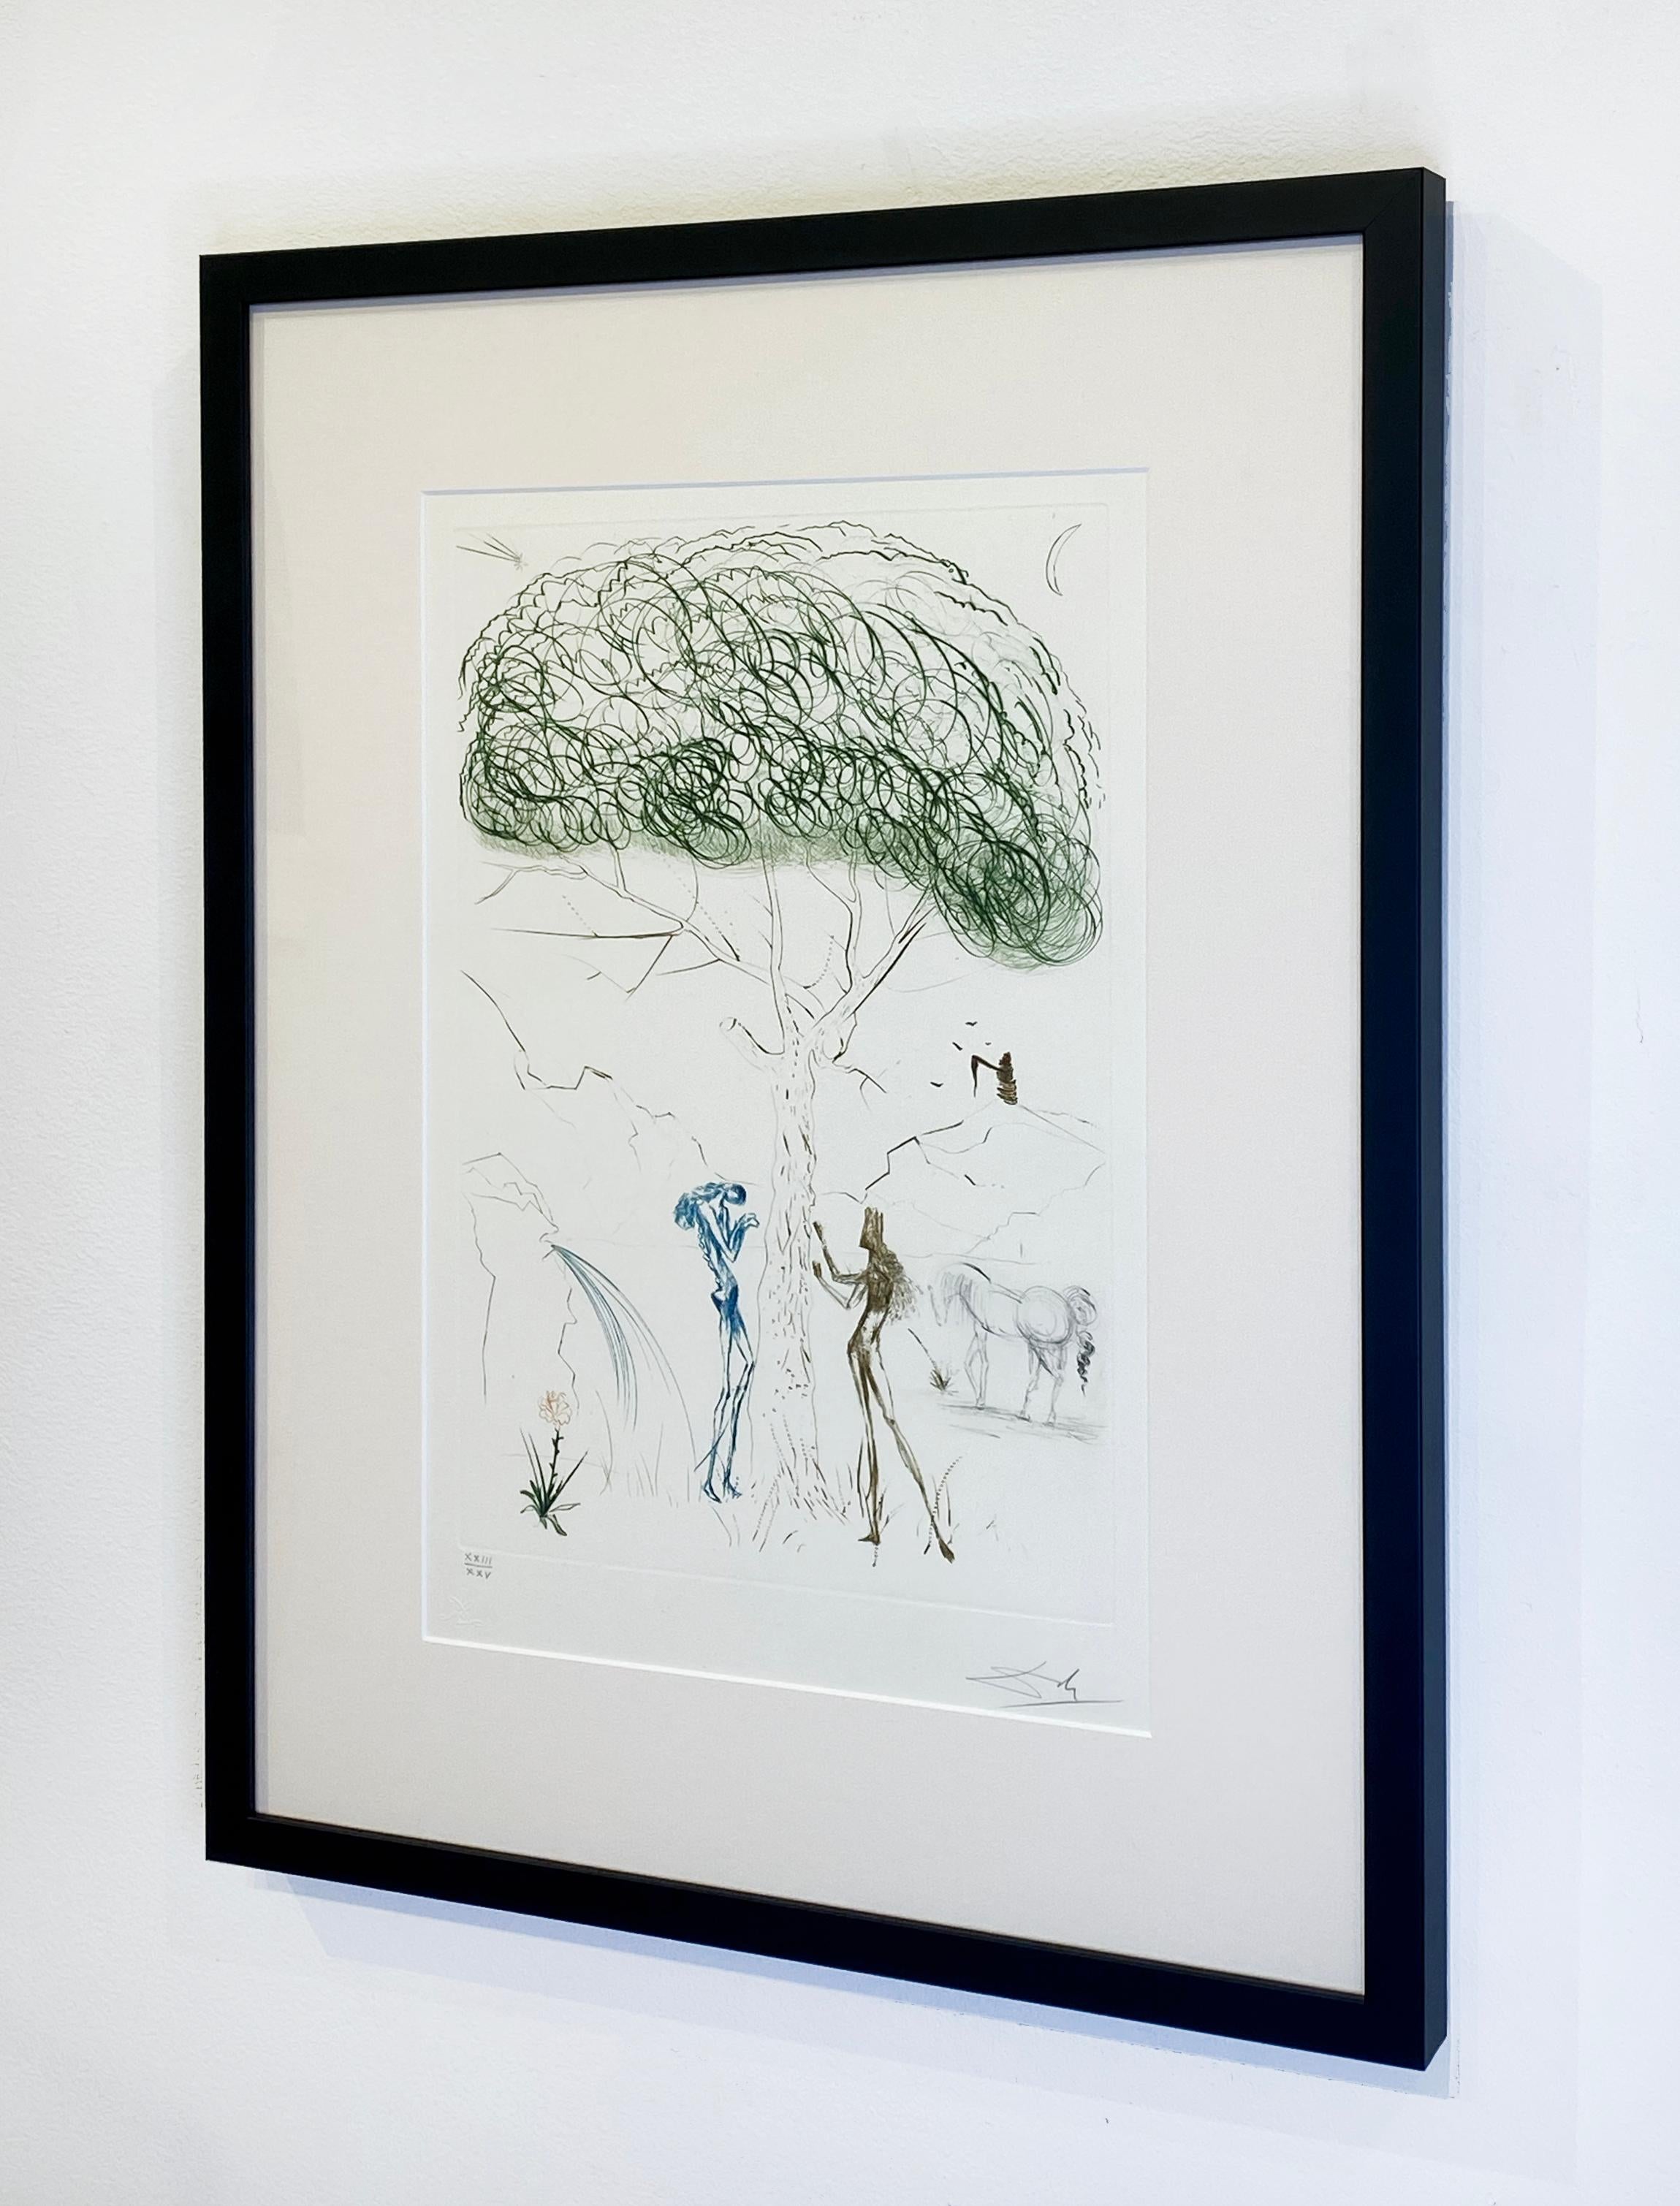 Artist:  Dali, Salvador
Title:  Under the Parasol Pine 
Series:  Tristan et Iseult
Date:  1970
Medium:  drypoint printed in color
Framed Dimensions:  25.5